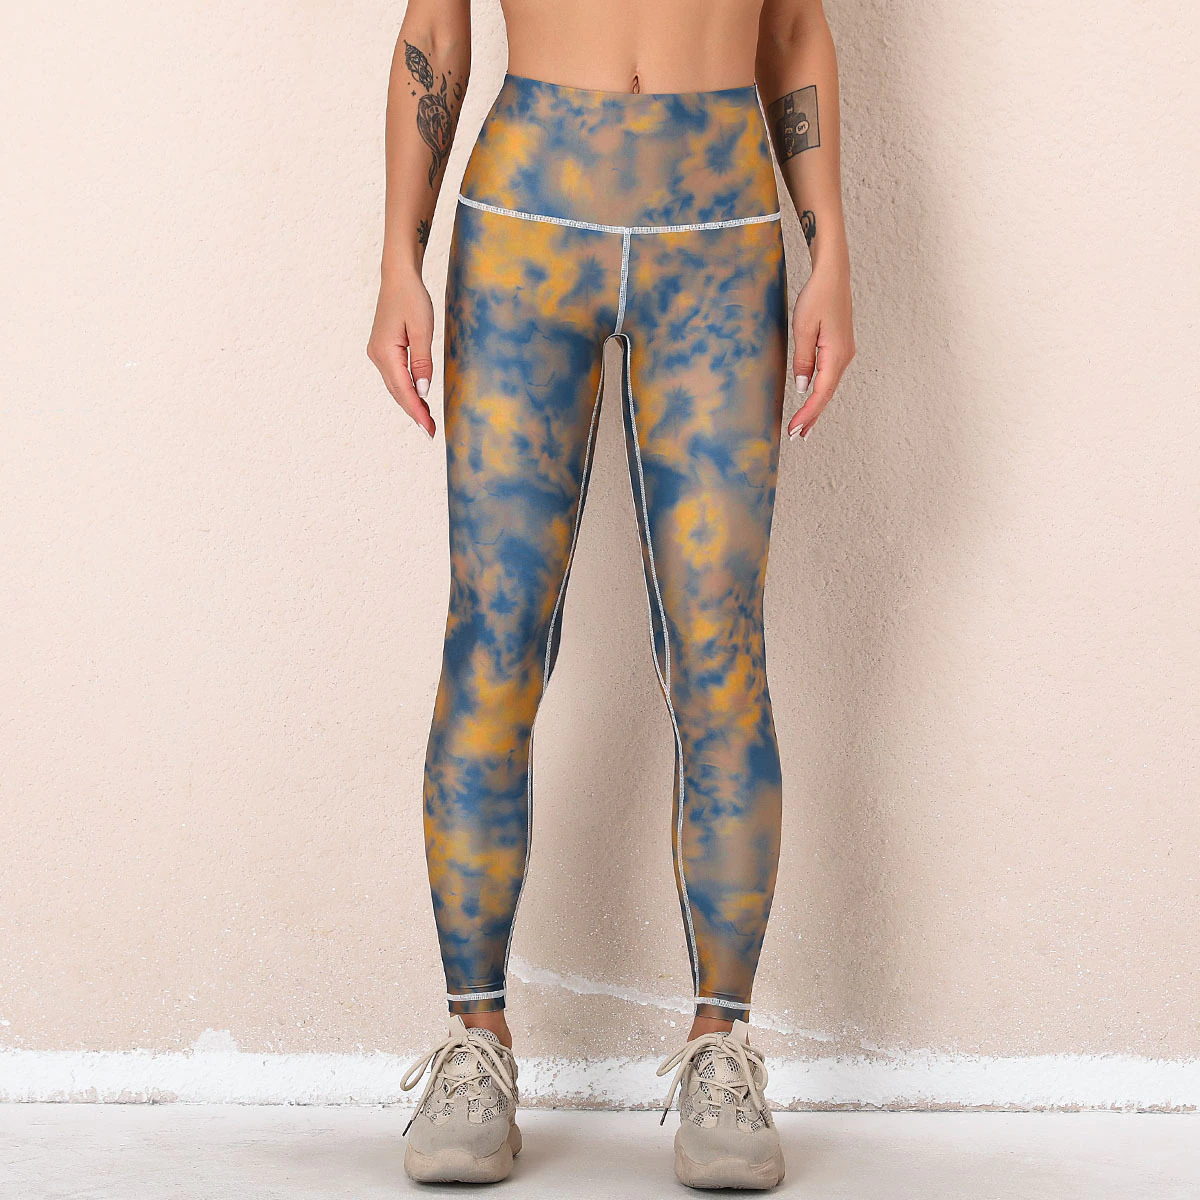 Colorful Yoga Pants for Women - skyjackerz